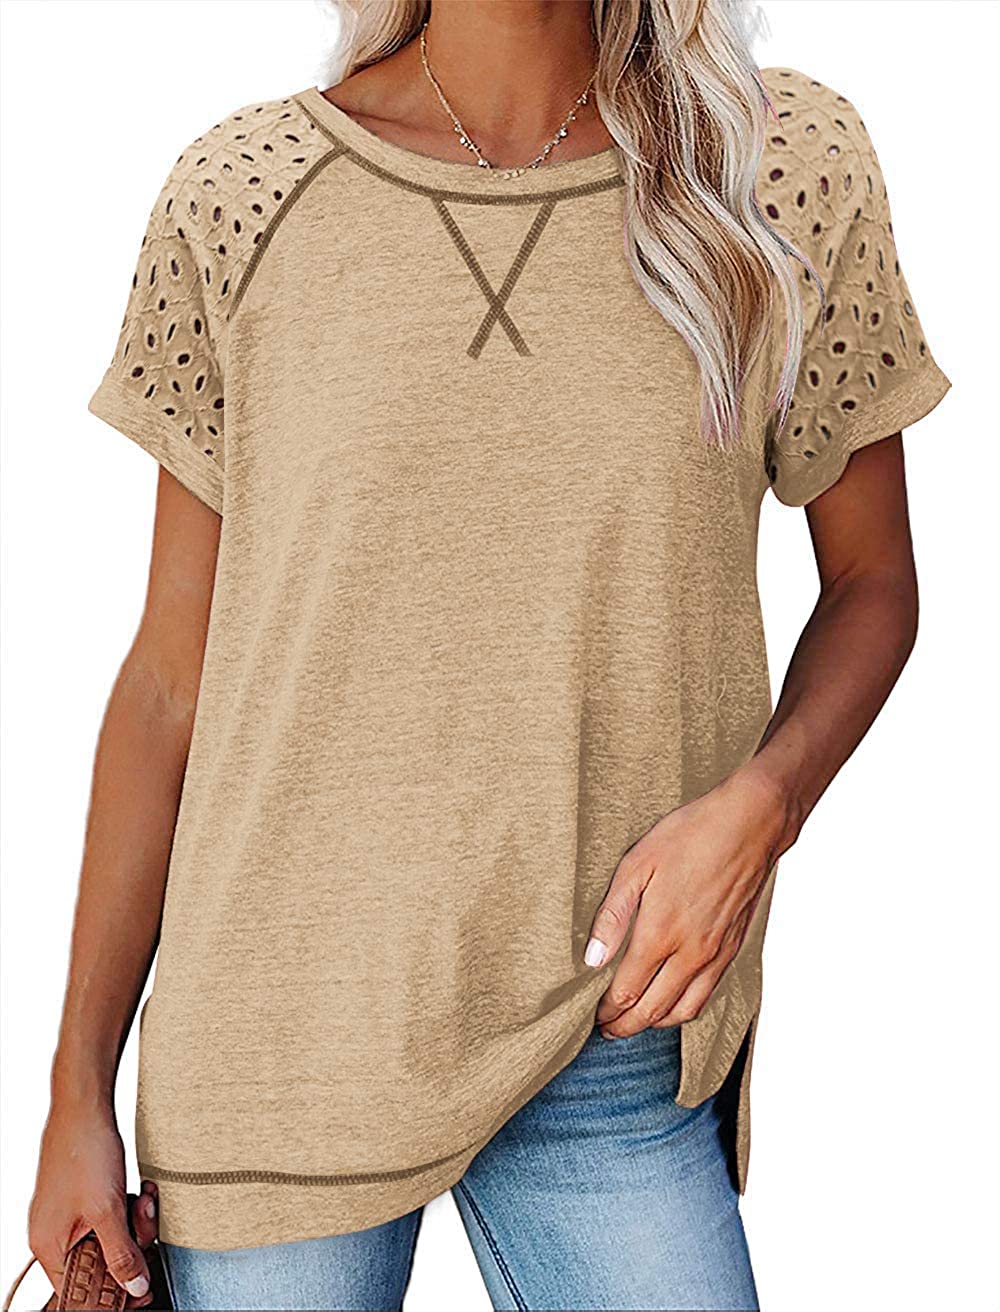 Hestenve Women‘s Short Sleeve Crewneck T Shirts Side Split Fashion Casual Loose Shirts Tunic Tops